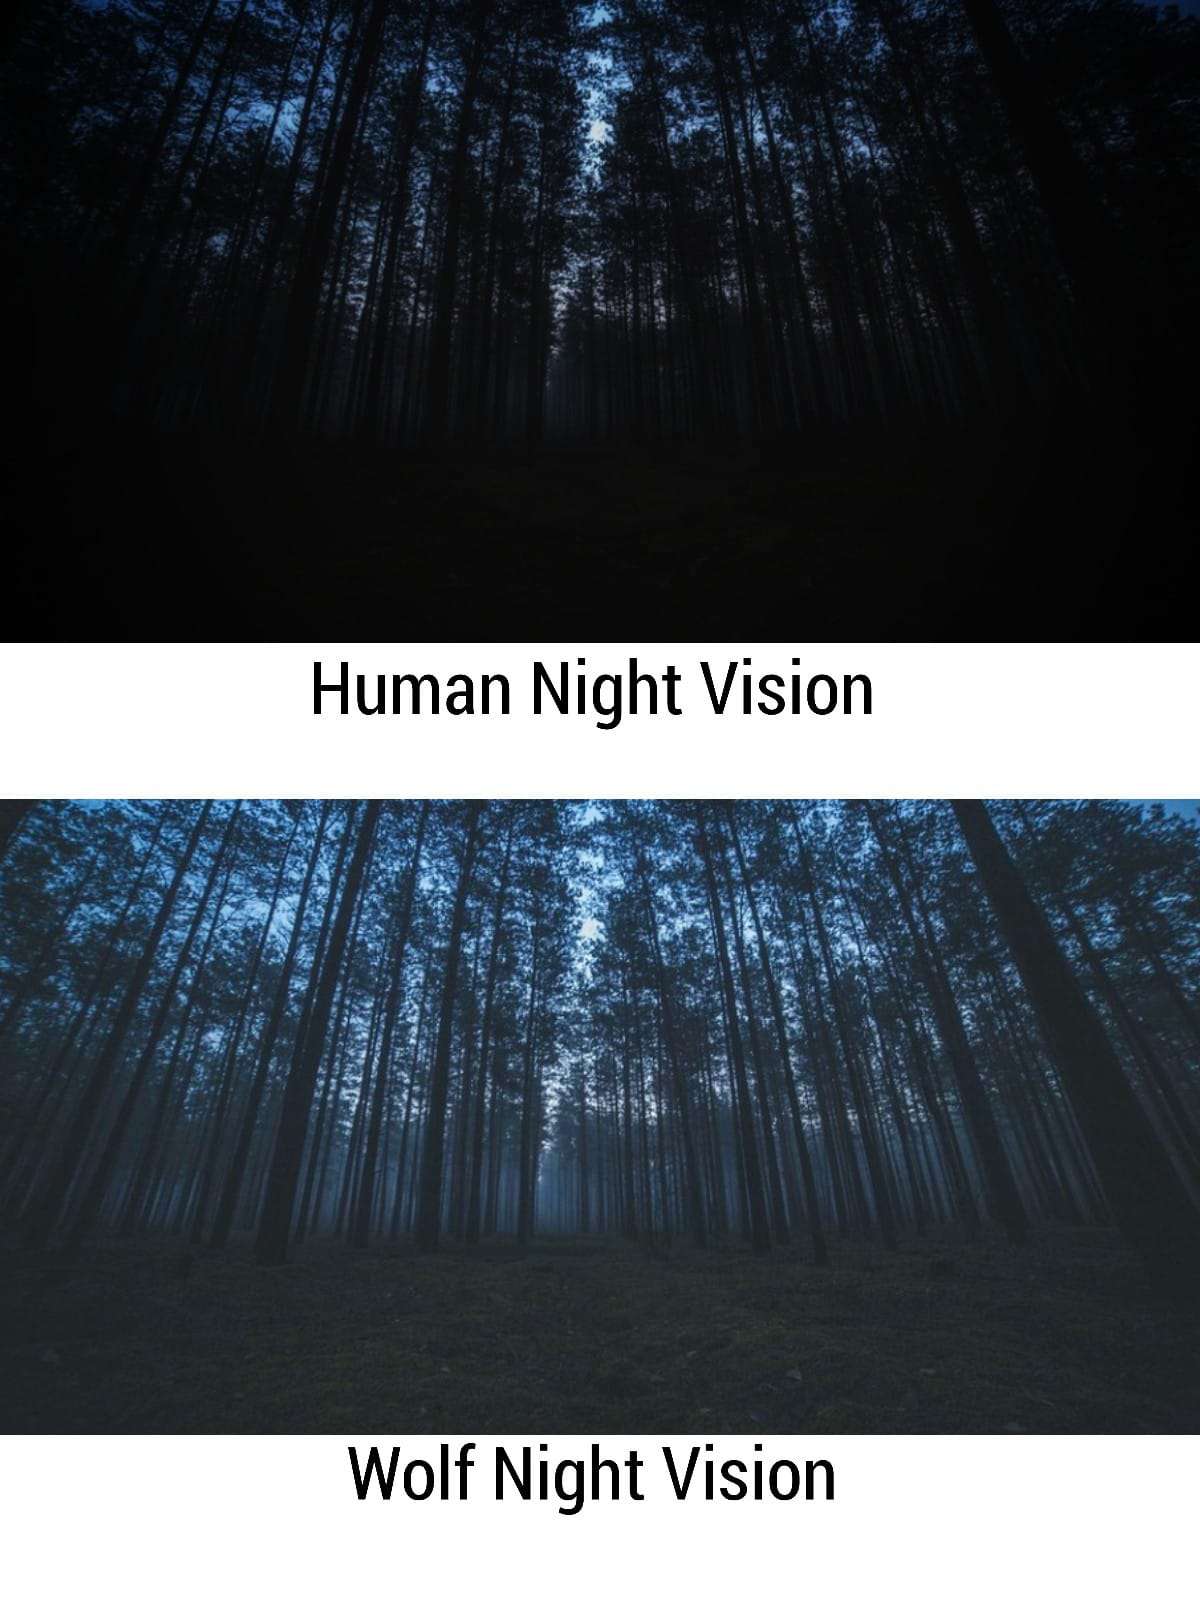 Wolf Night Vision